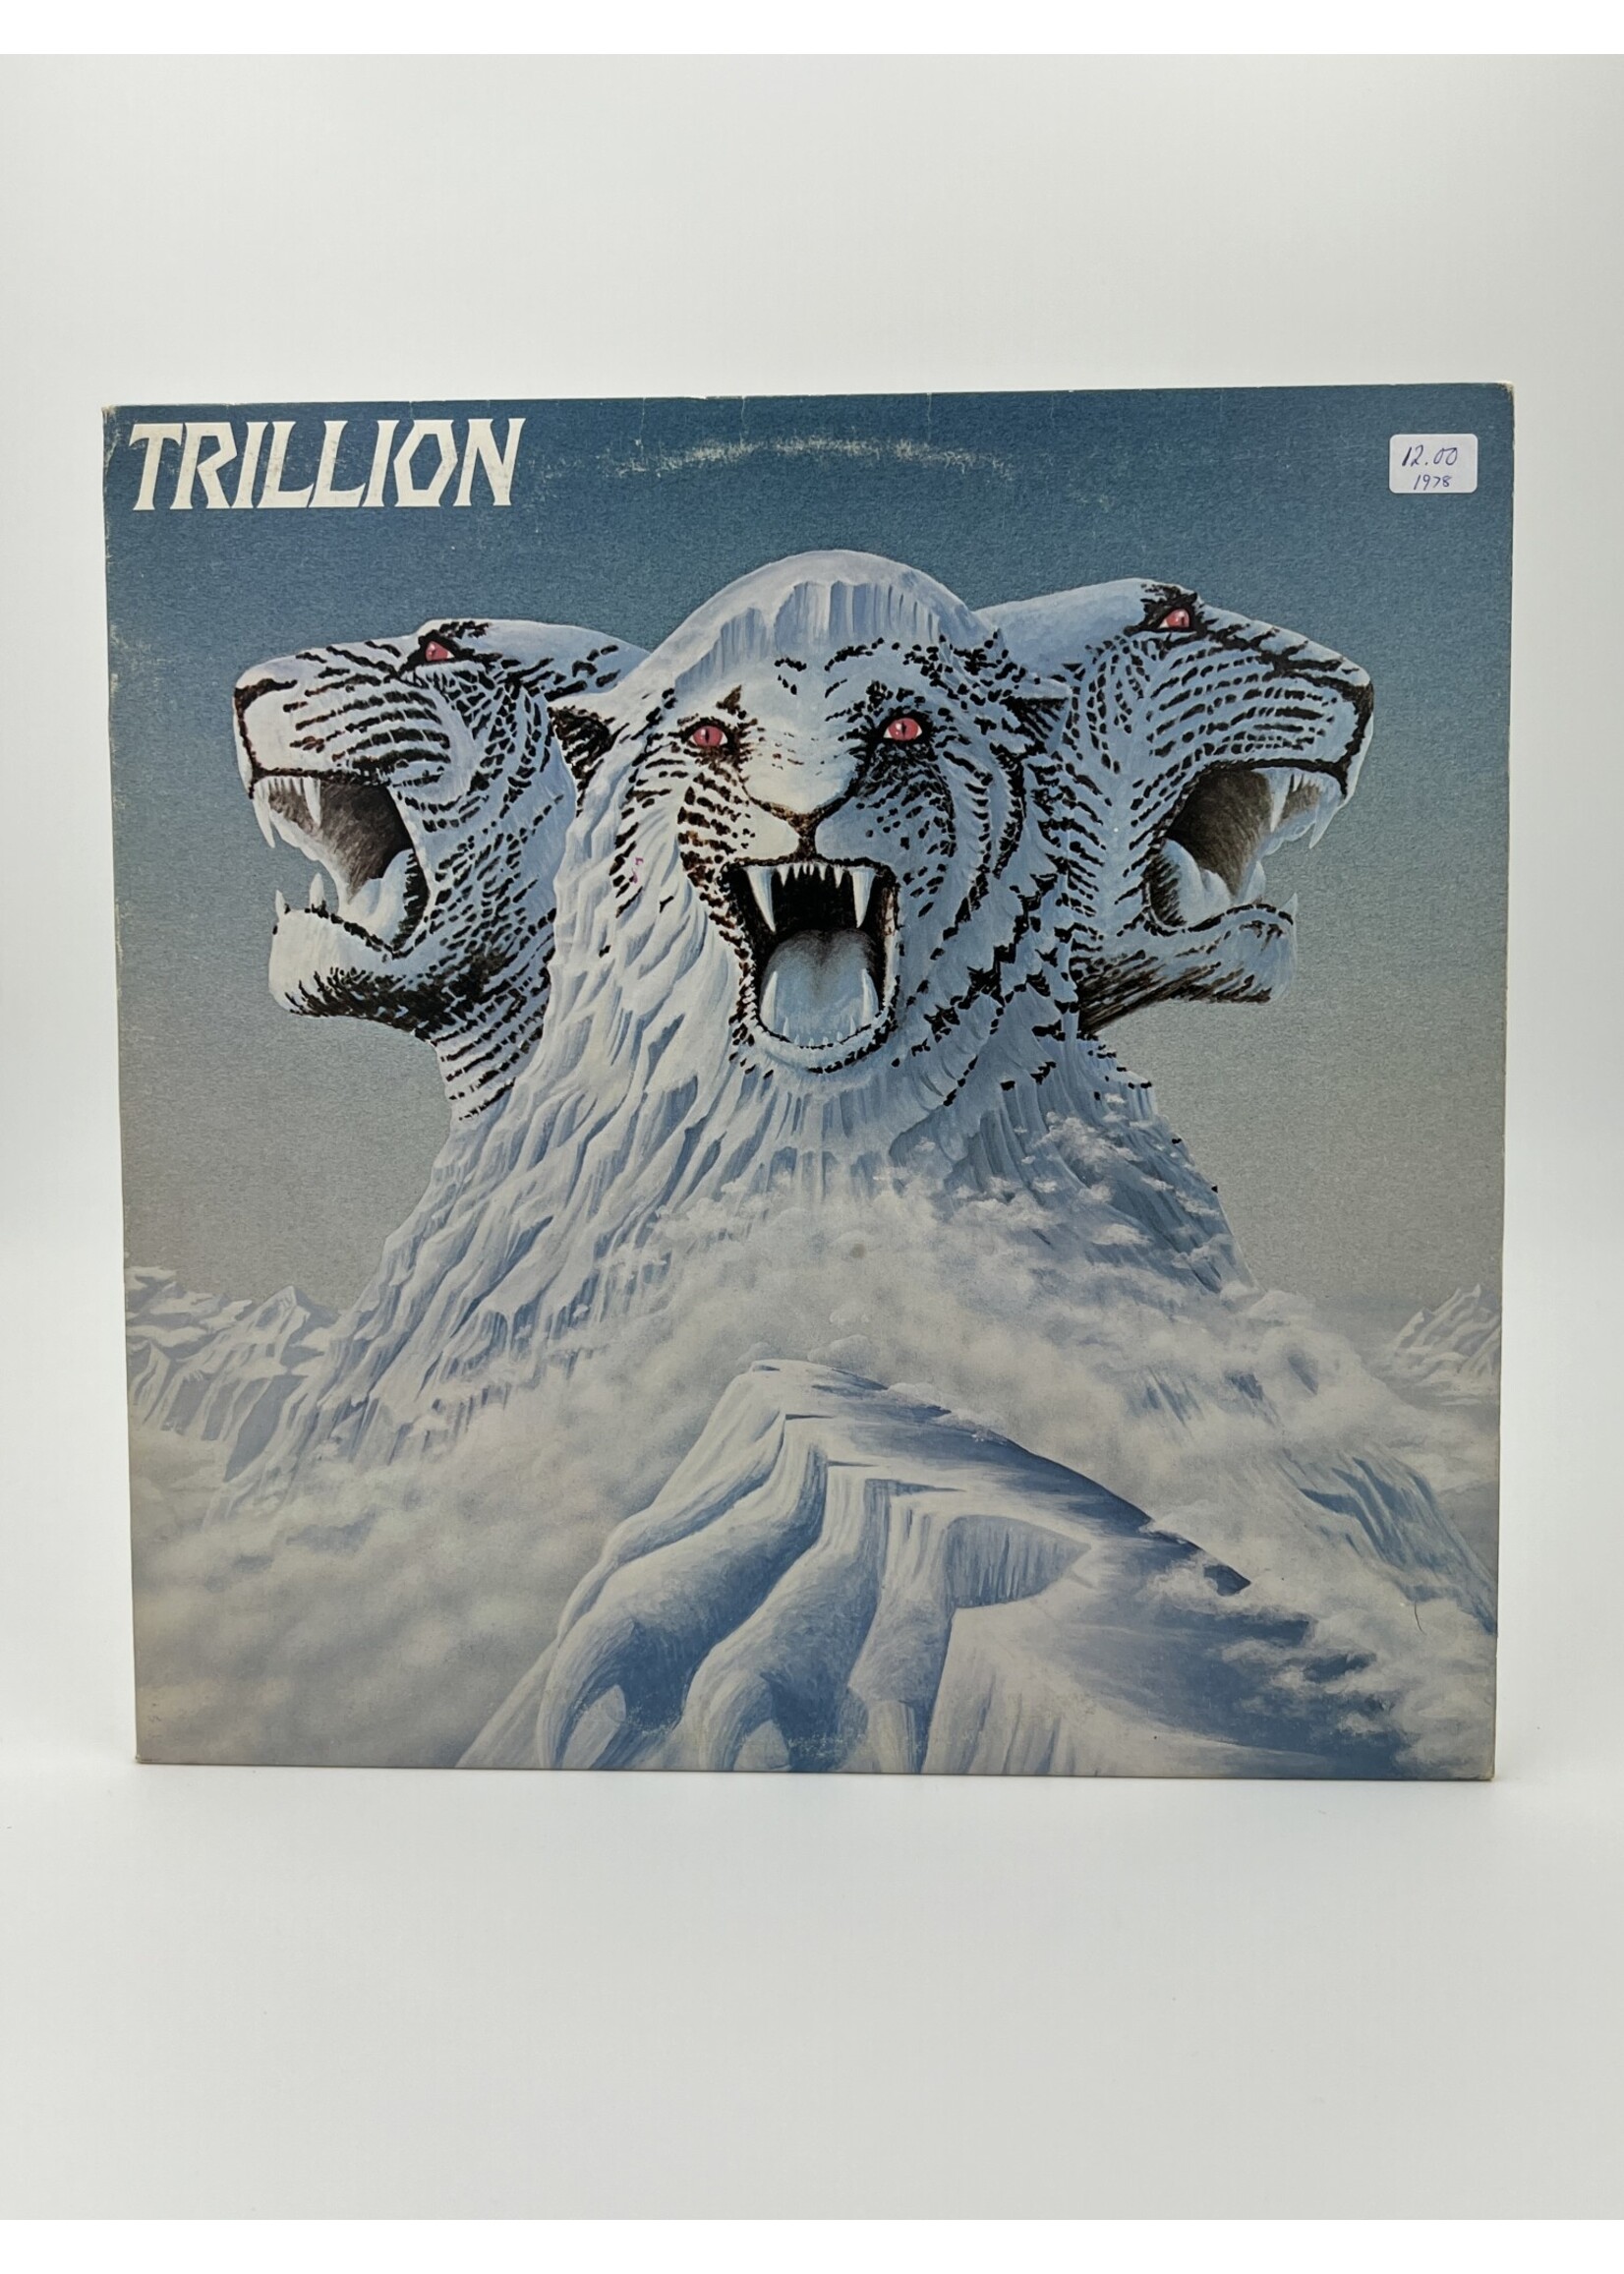 LP   Trillion Self Titled LP Record